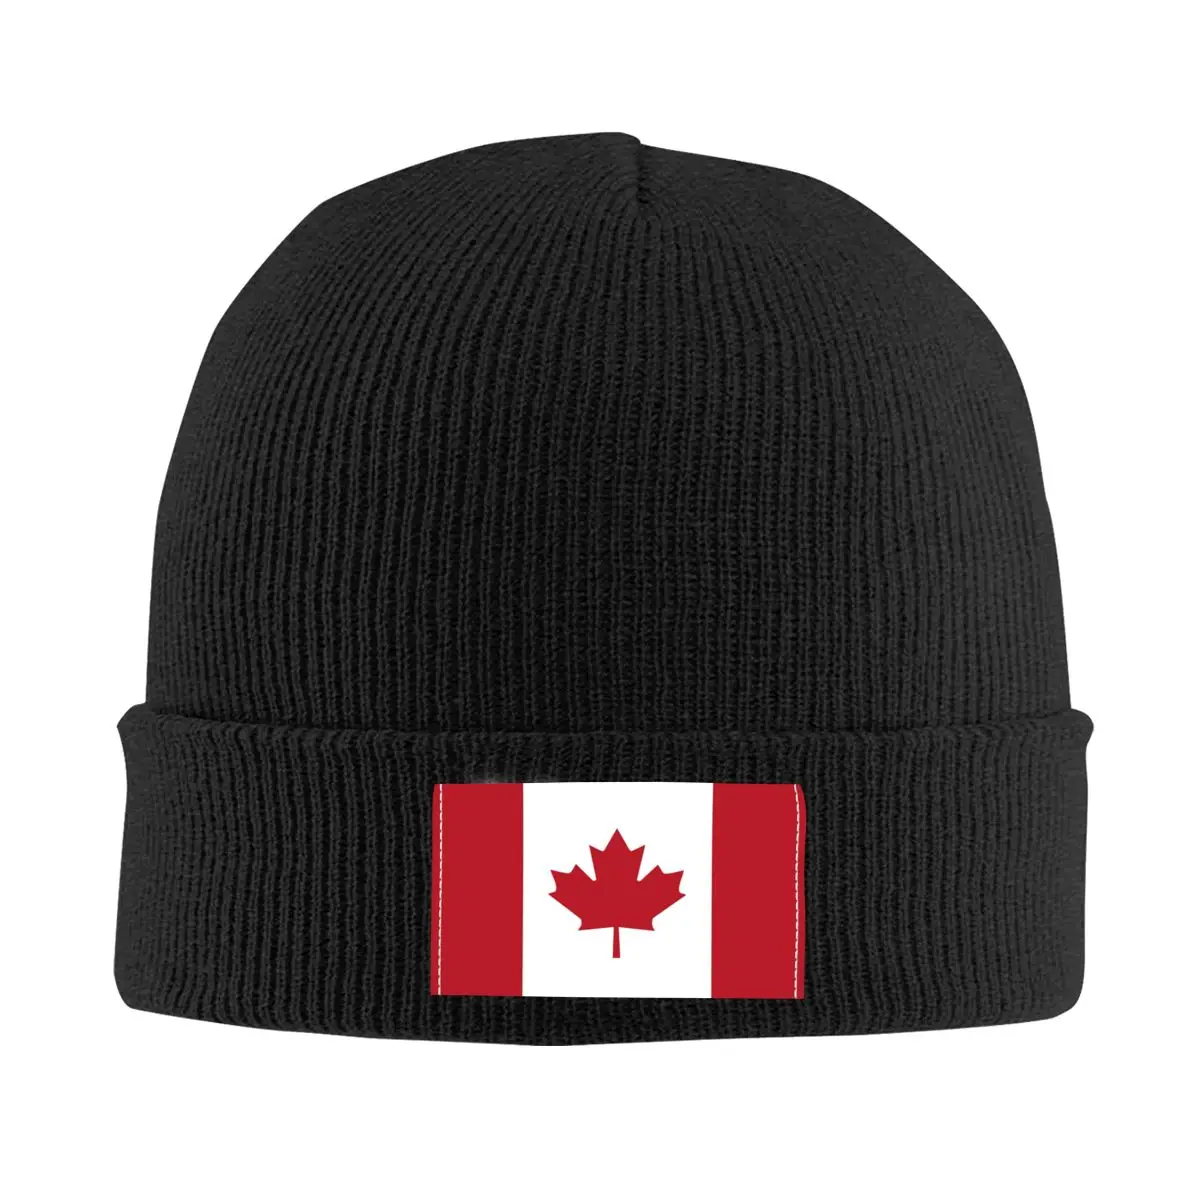 Flag Of Canada Skullies Beanies Caps For Men Women Unisex Fashion Winter Warm Knit Hat Adult Patriotism Bonnet Hats 1